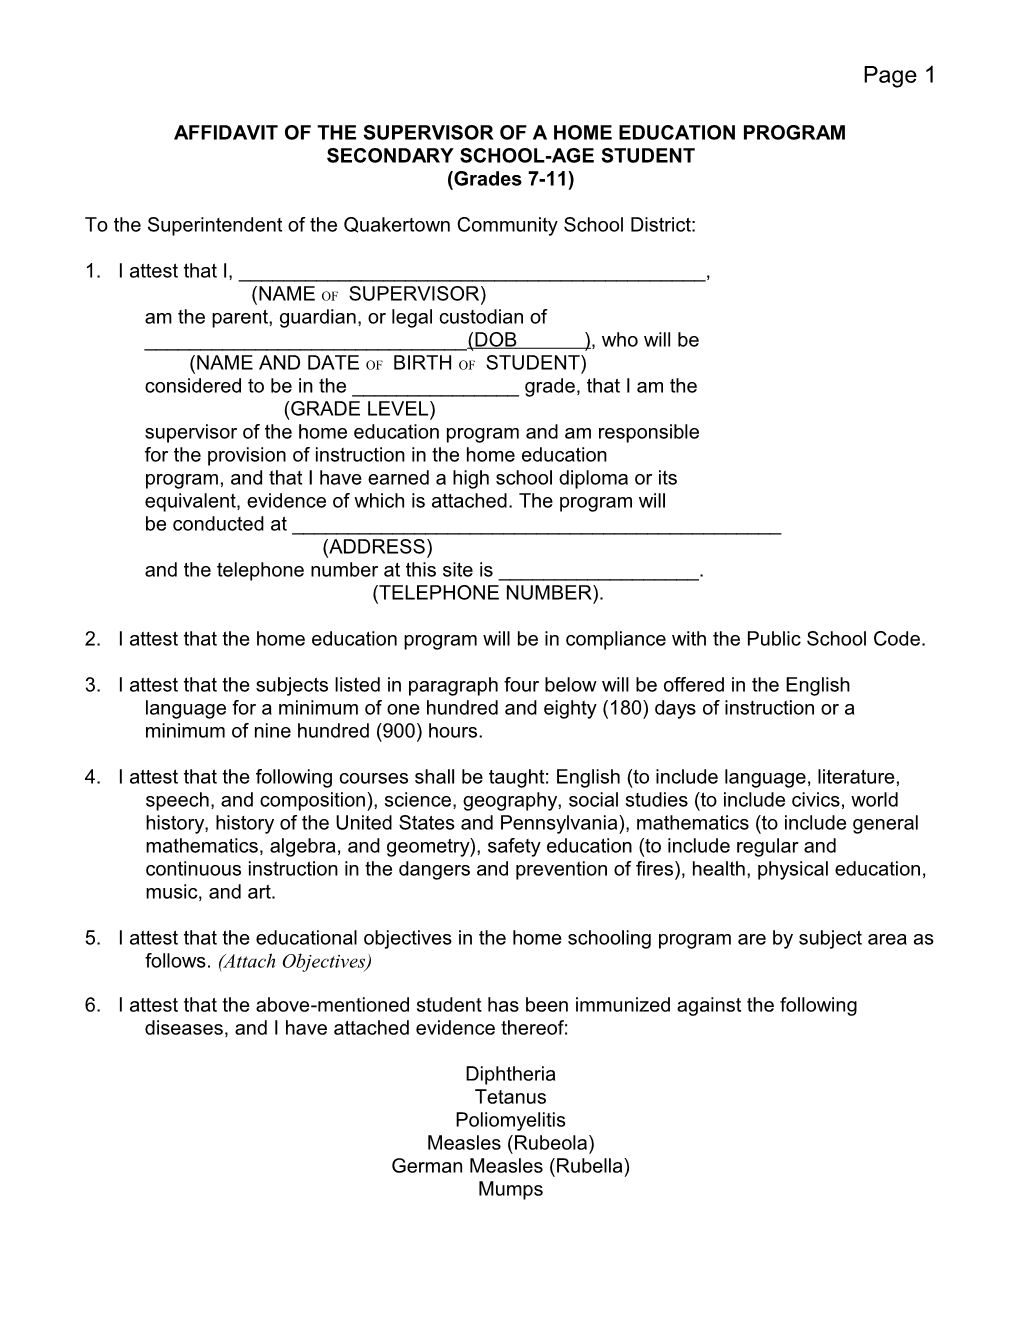 Affidavit of the Supervisor of a Home Education Program